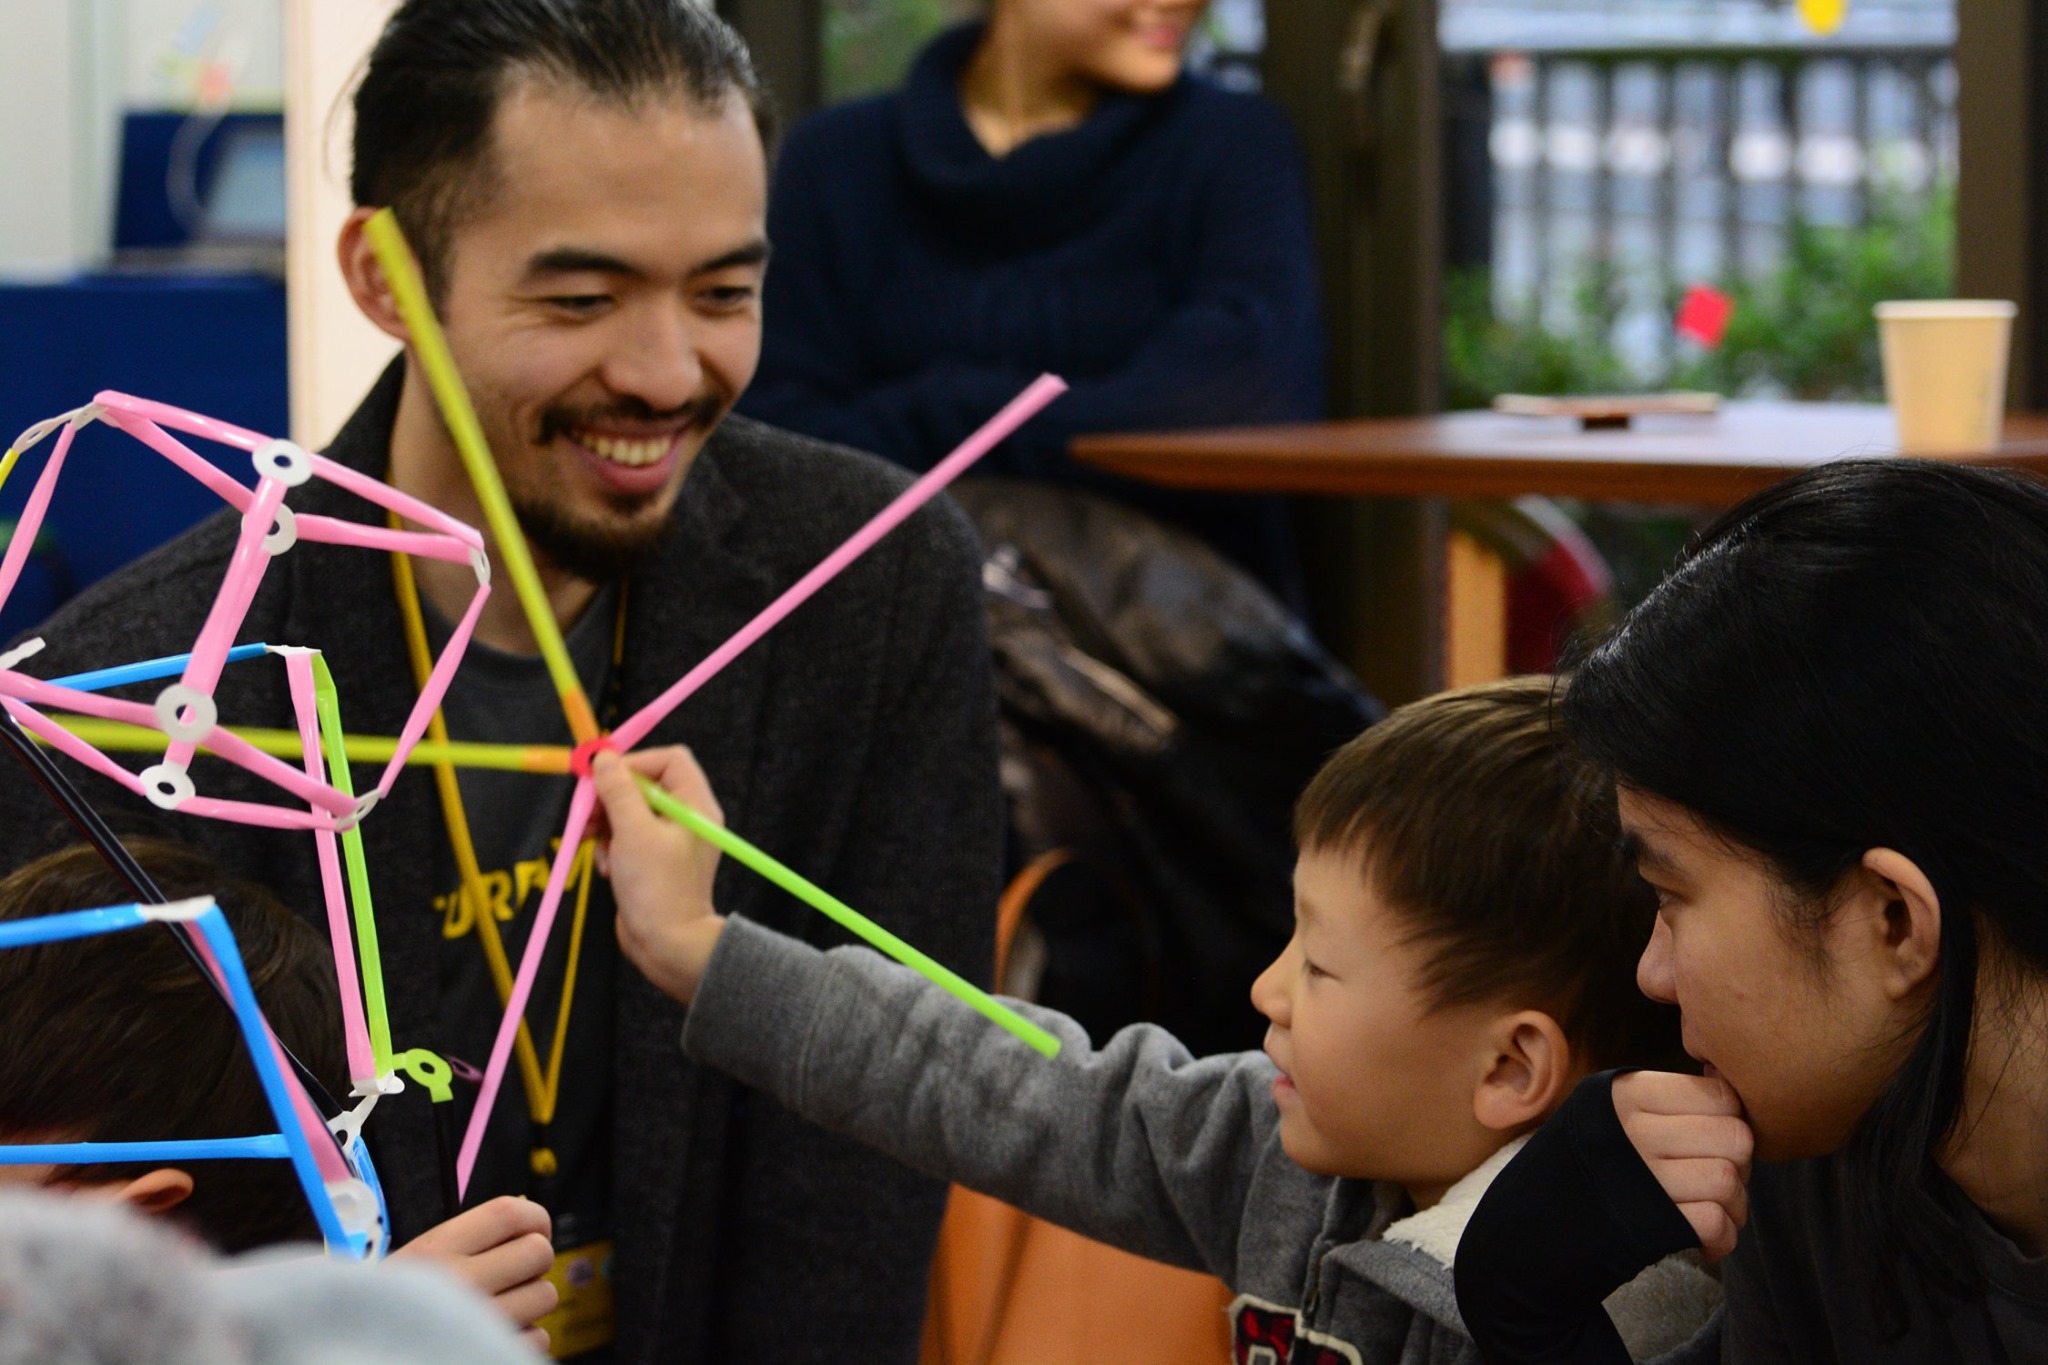 [Tuning In] Tsuyoshi Domoto on nurturing creativity in early childhood education